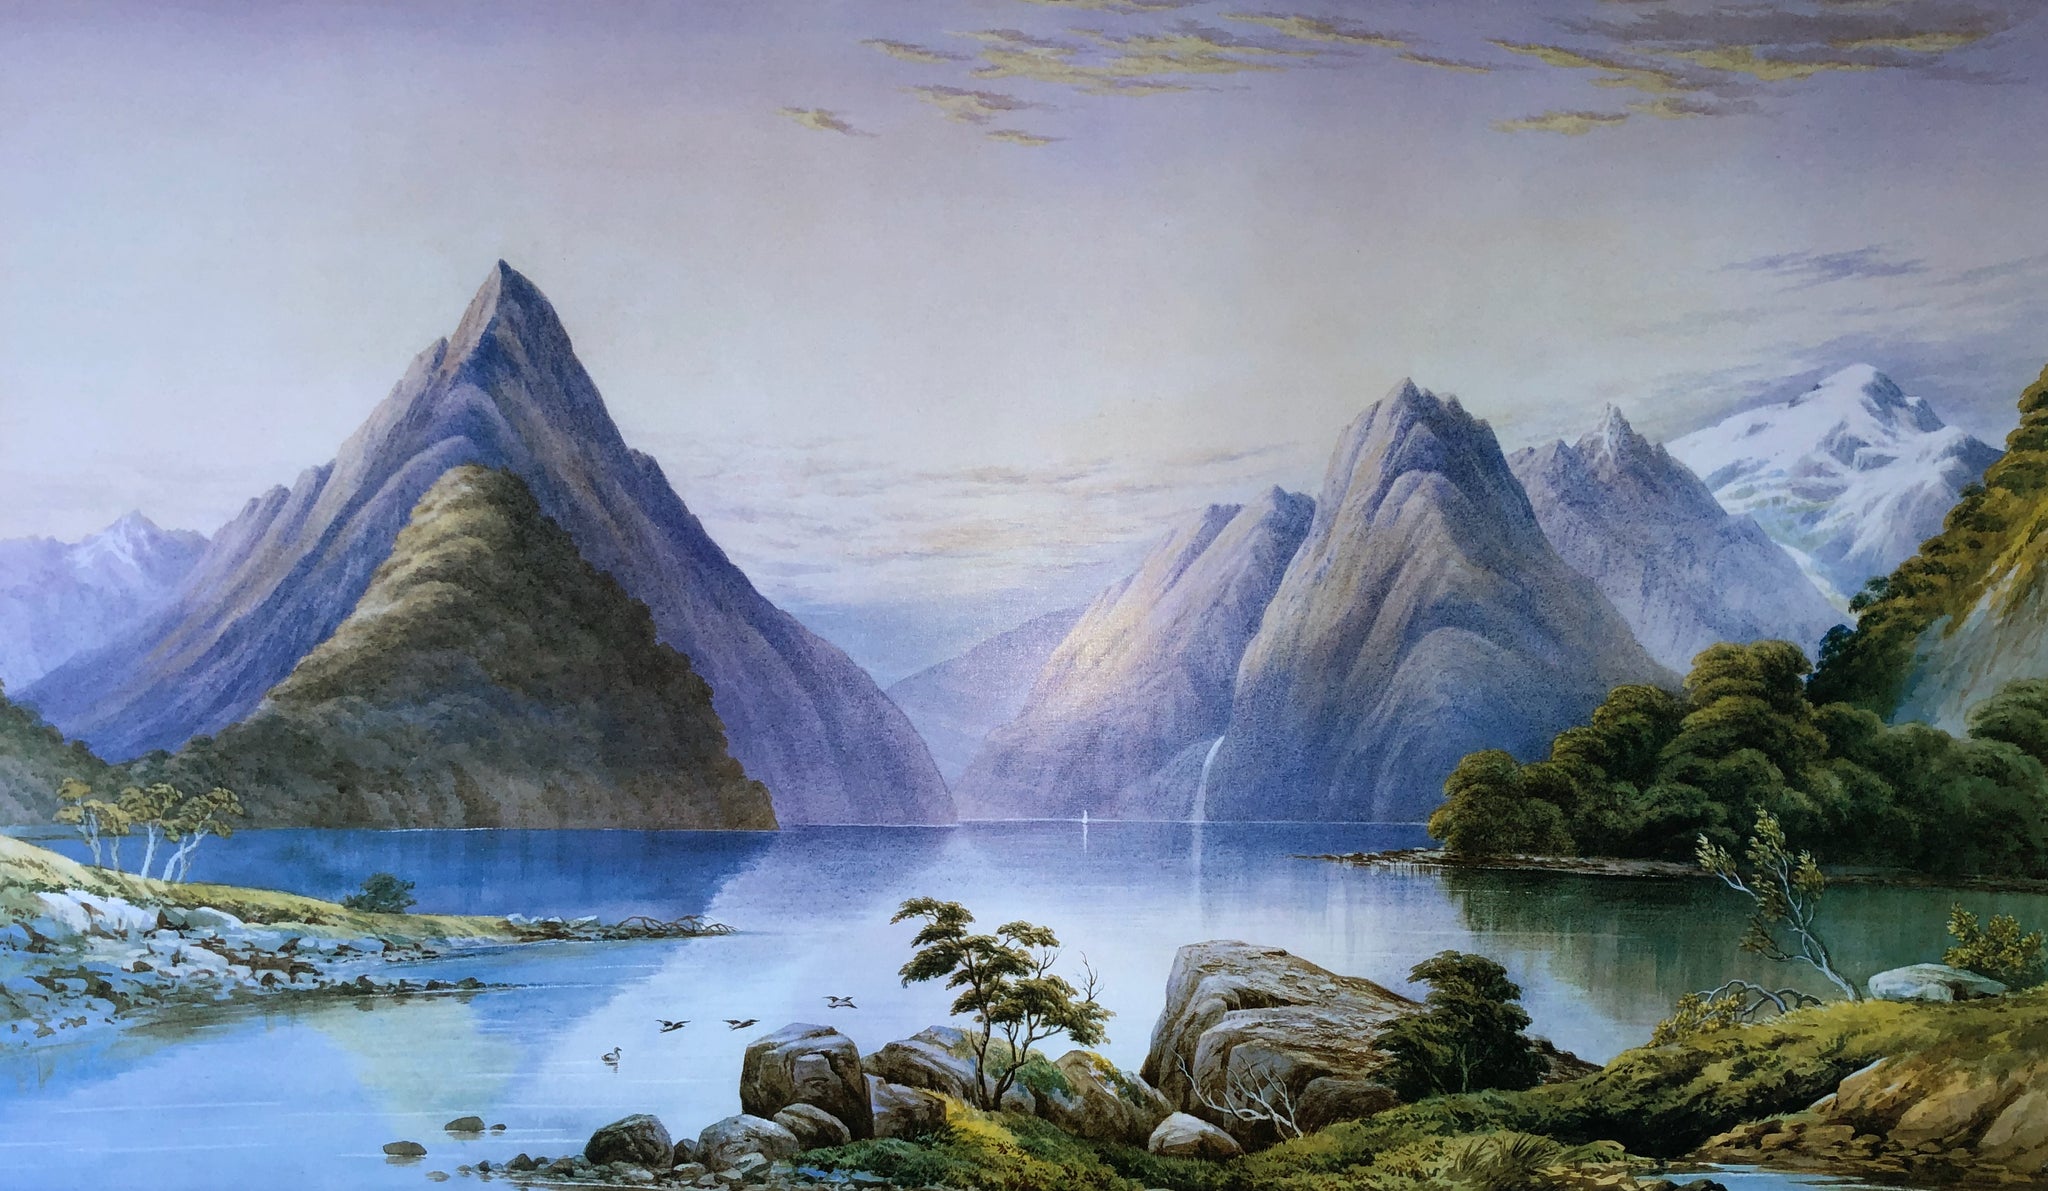 "Mitre Peak", Milford Sound, New Zealand - John Barr Clarke Hoyte